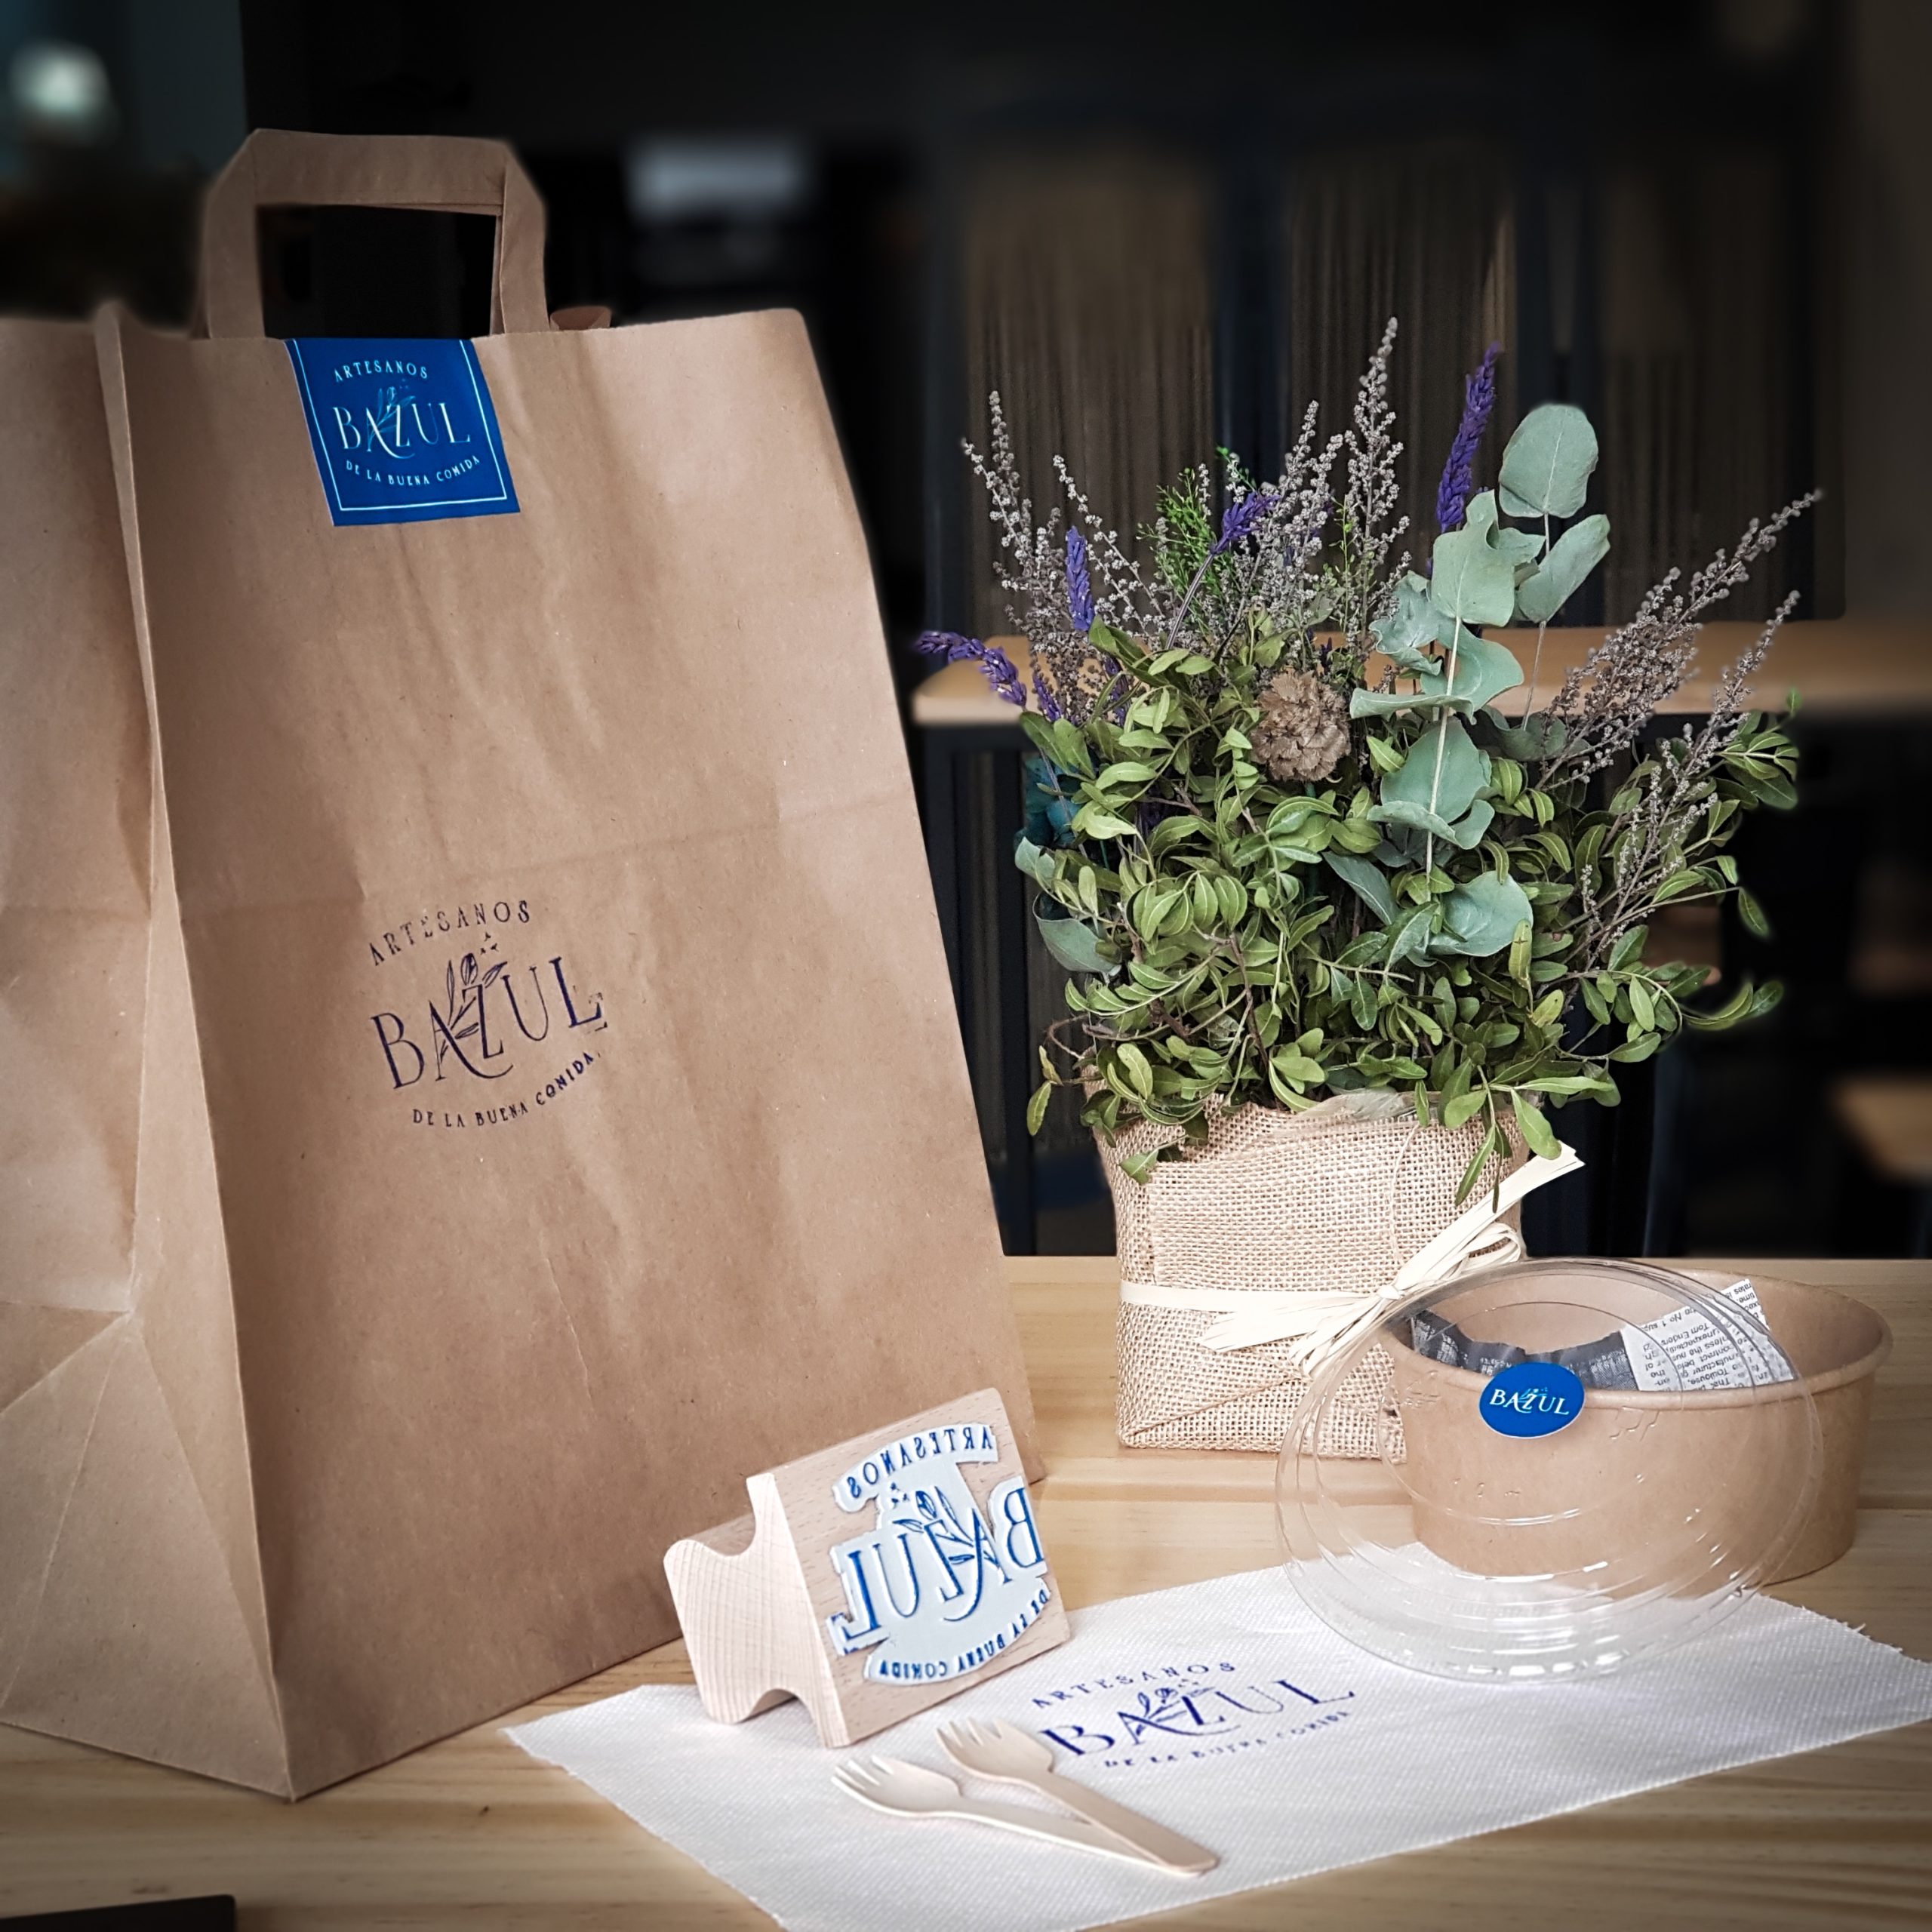 bolsa de papel personalizada para bazul restaurante - inmenta estudio creativo -+ paula berdiel - huesca